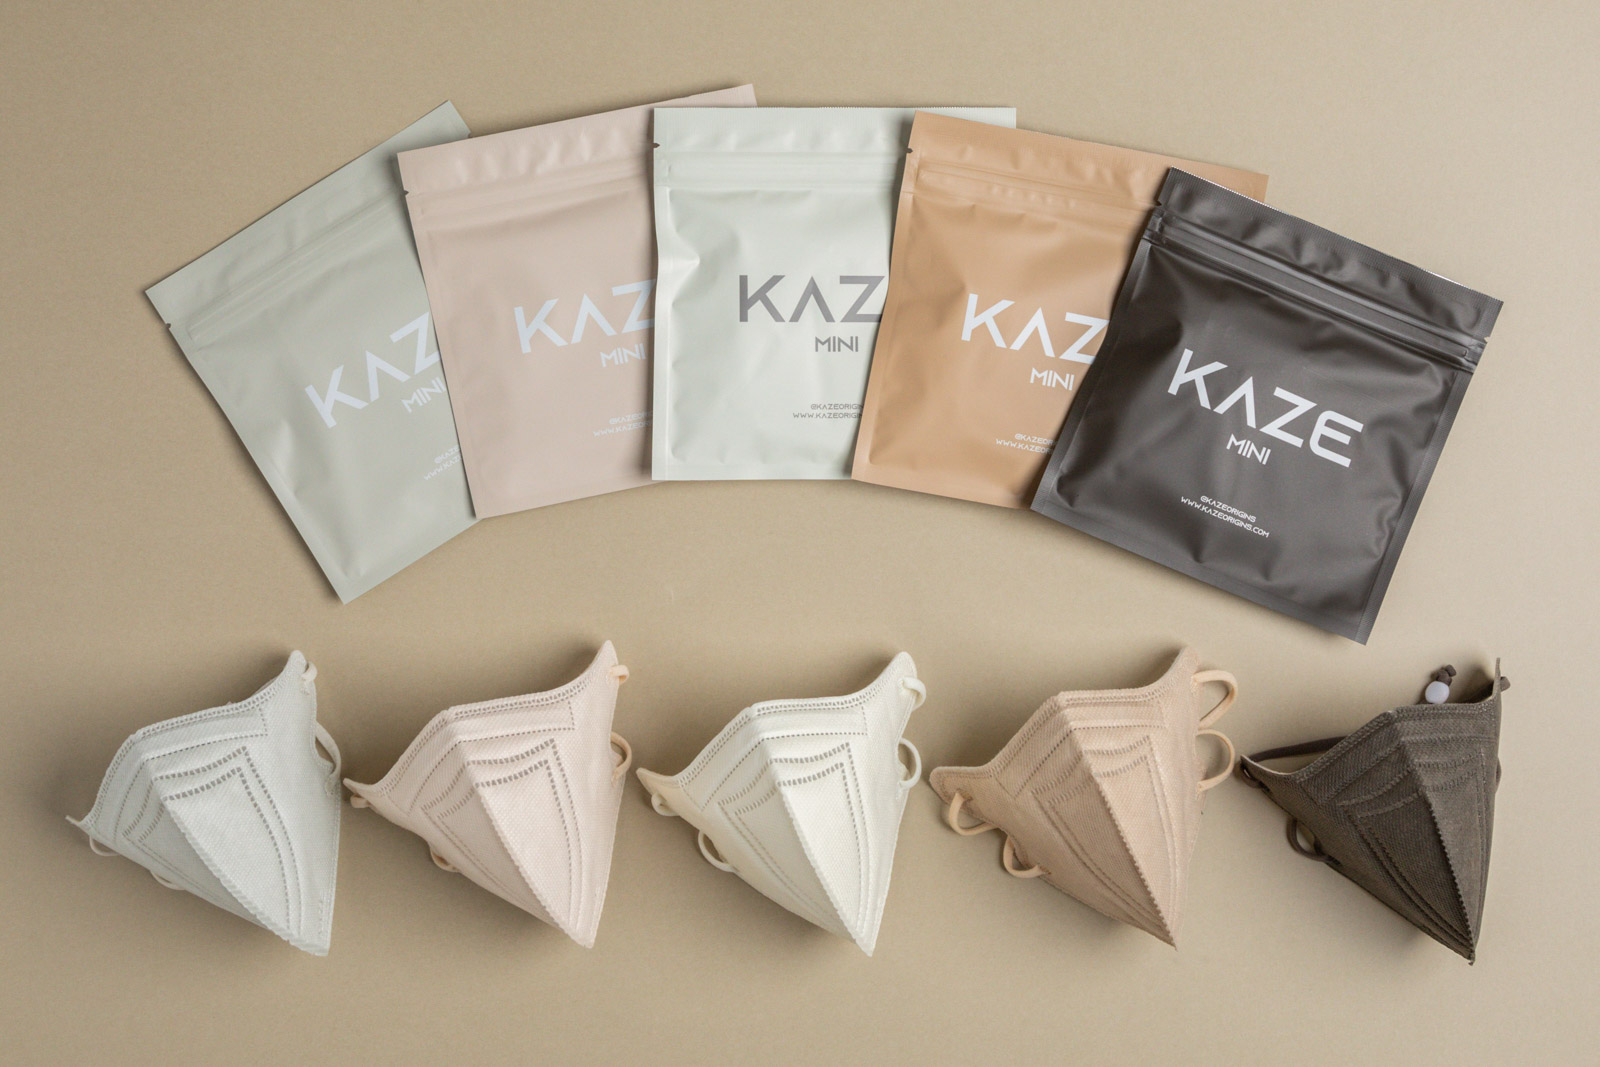 KAZE Face Masks